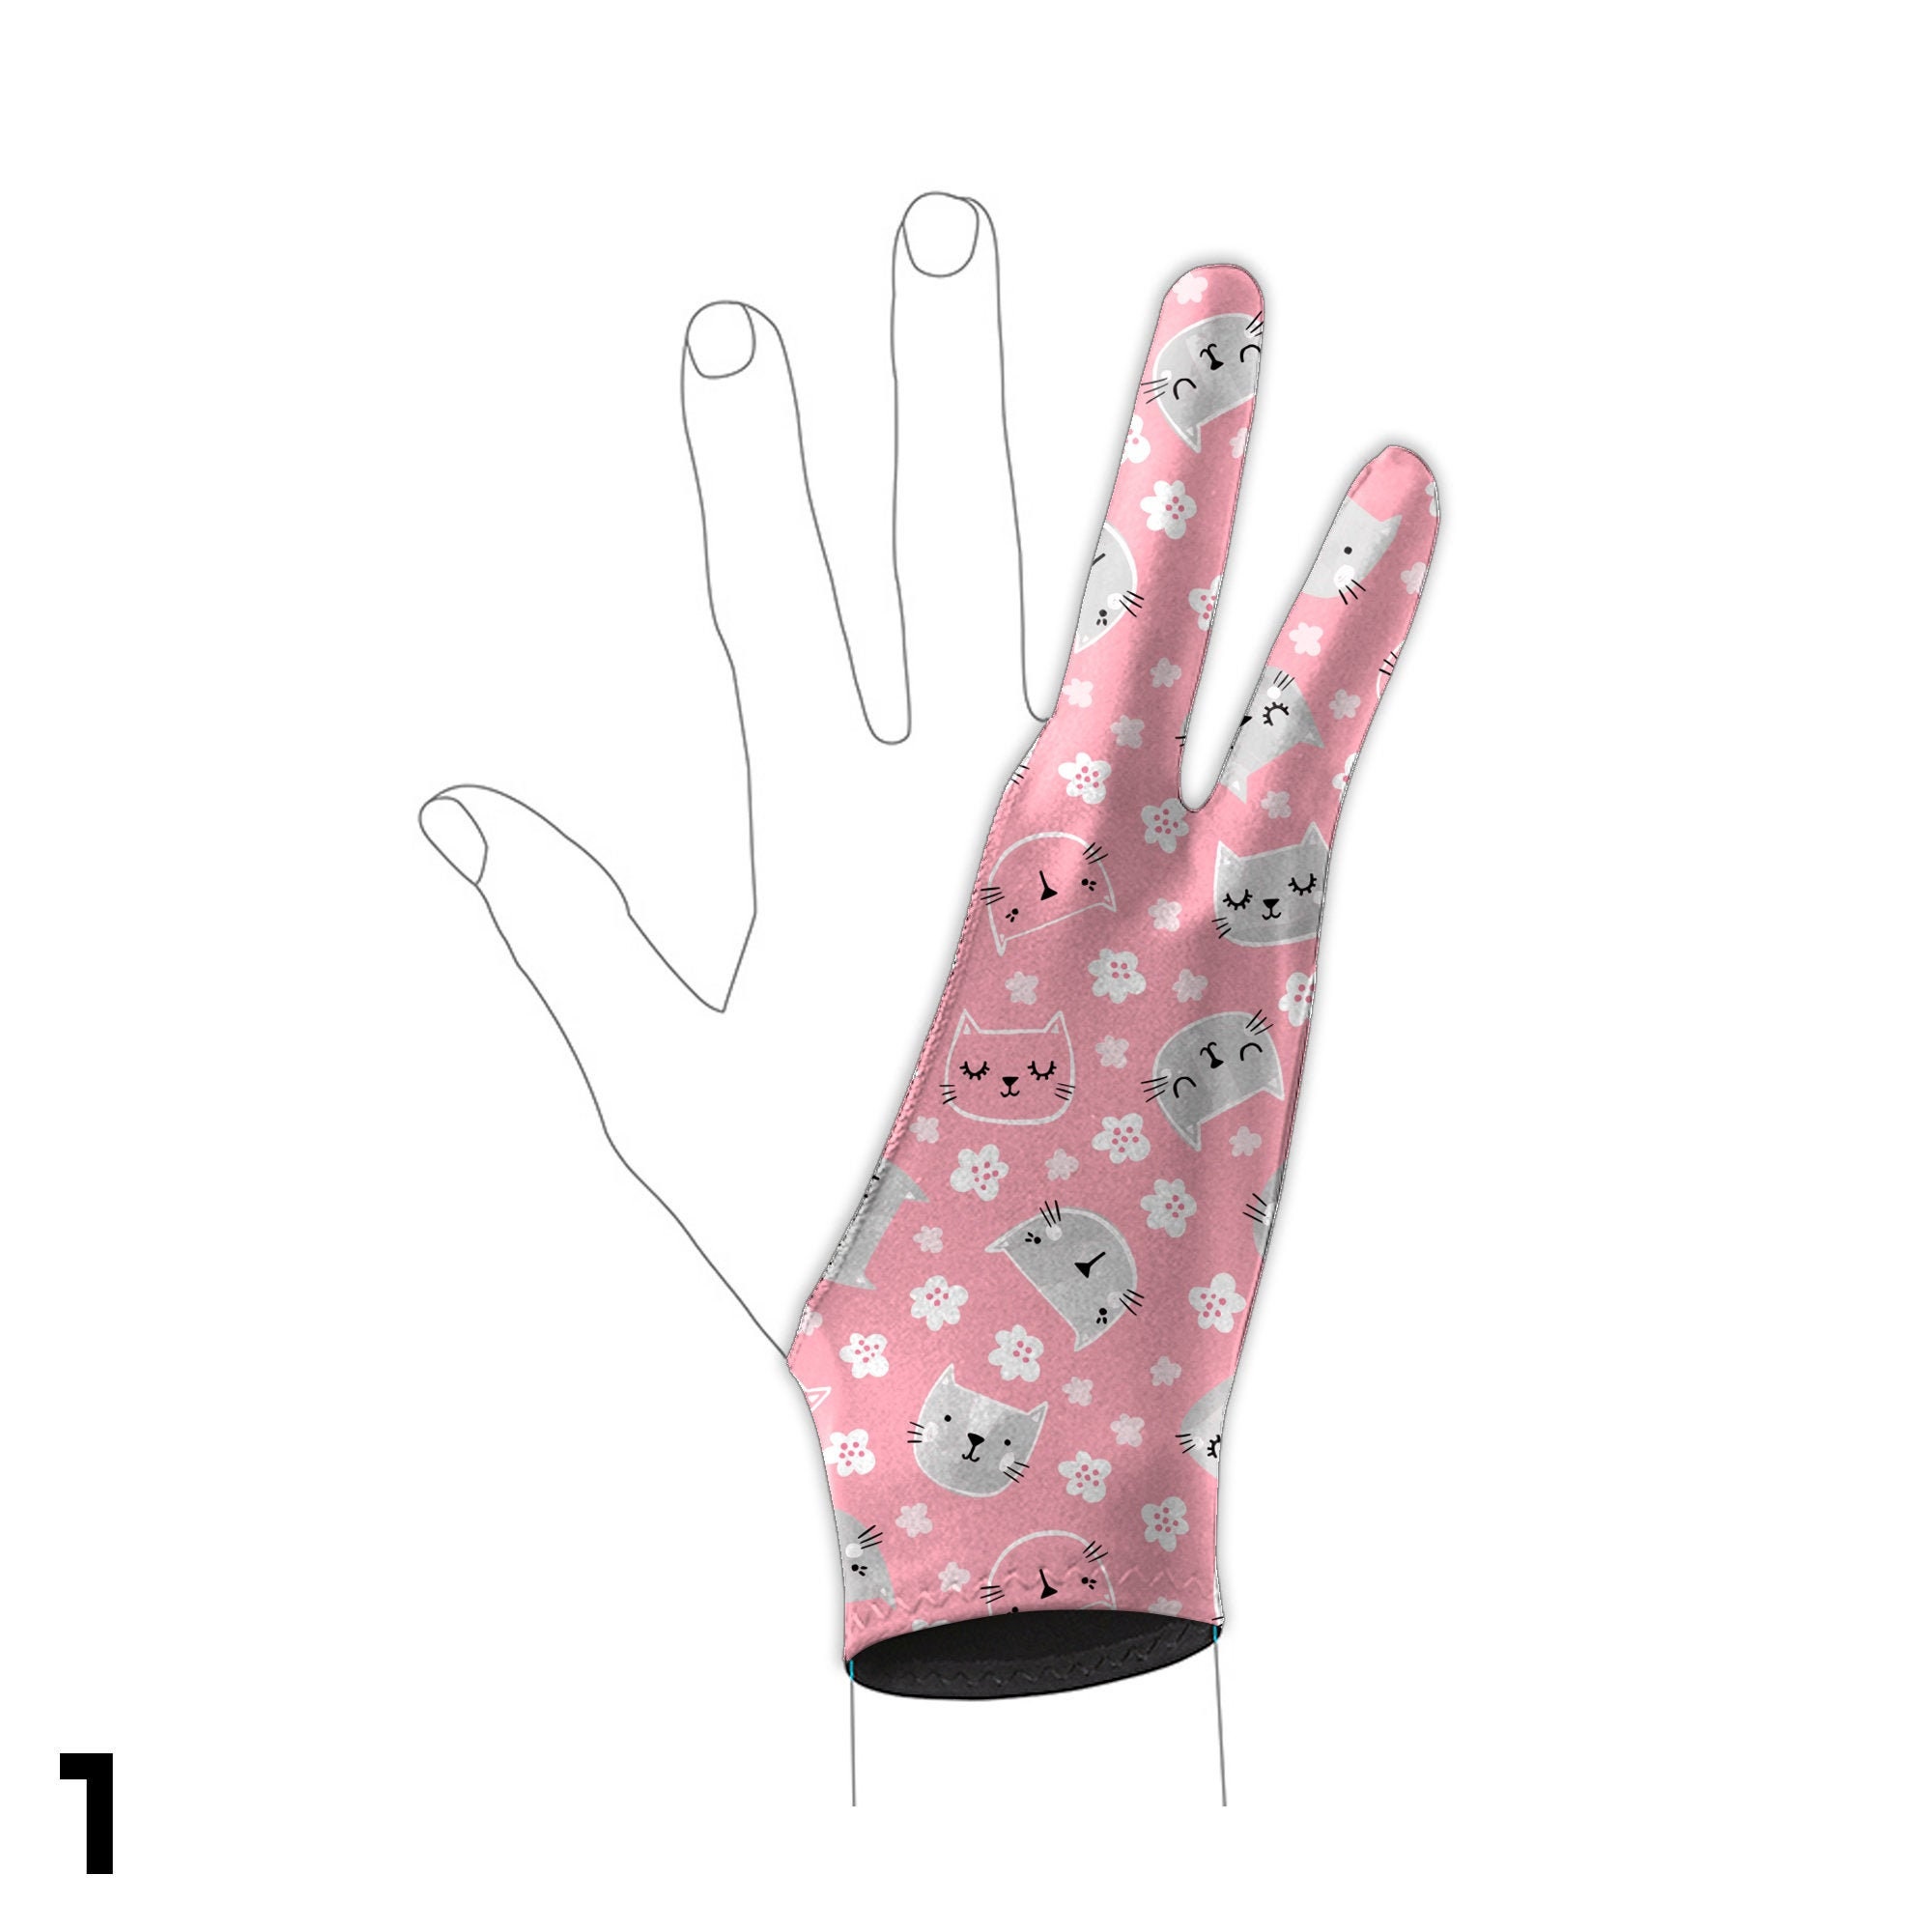 Catch the Star Print Digital Artist Glove L Men Women Kids Size